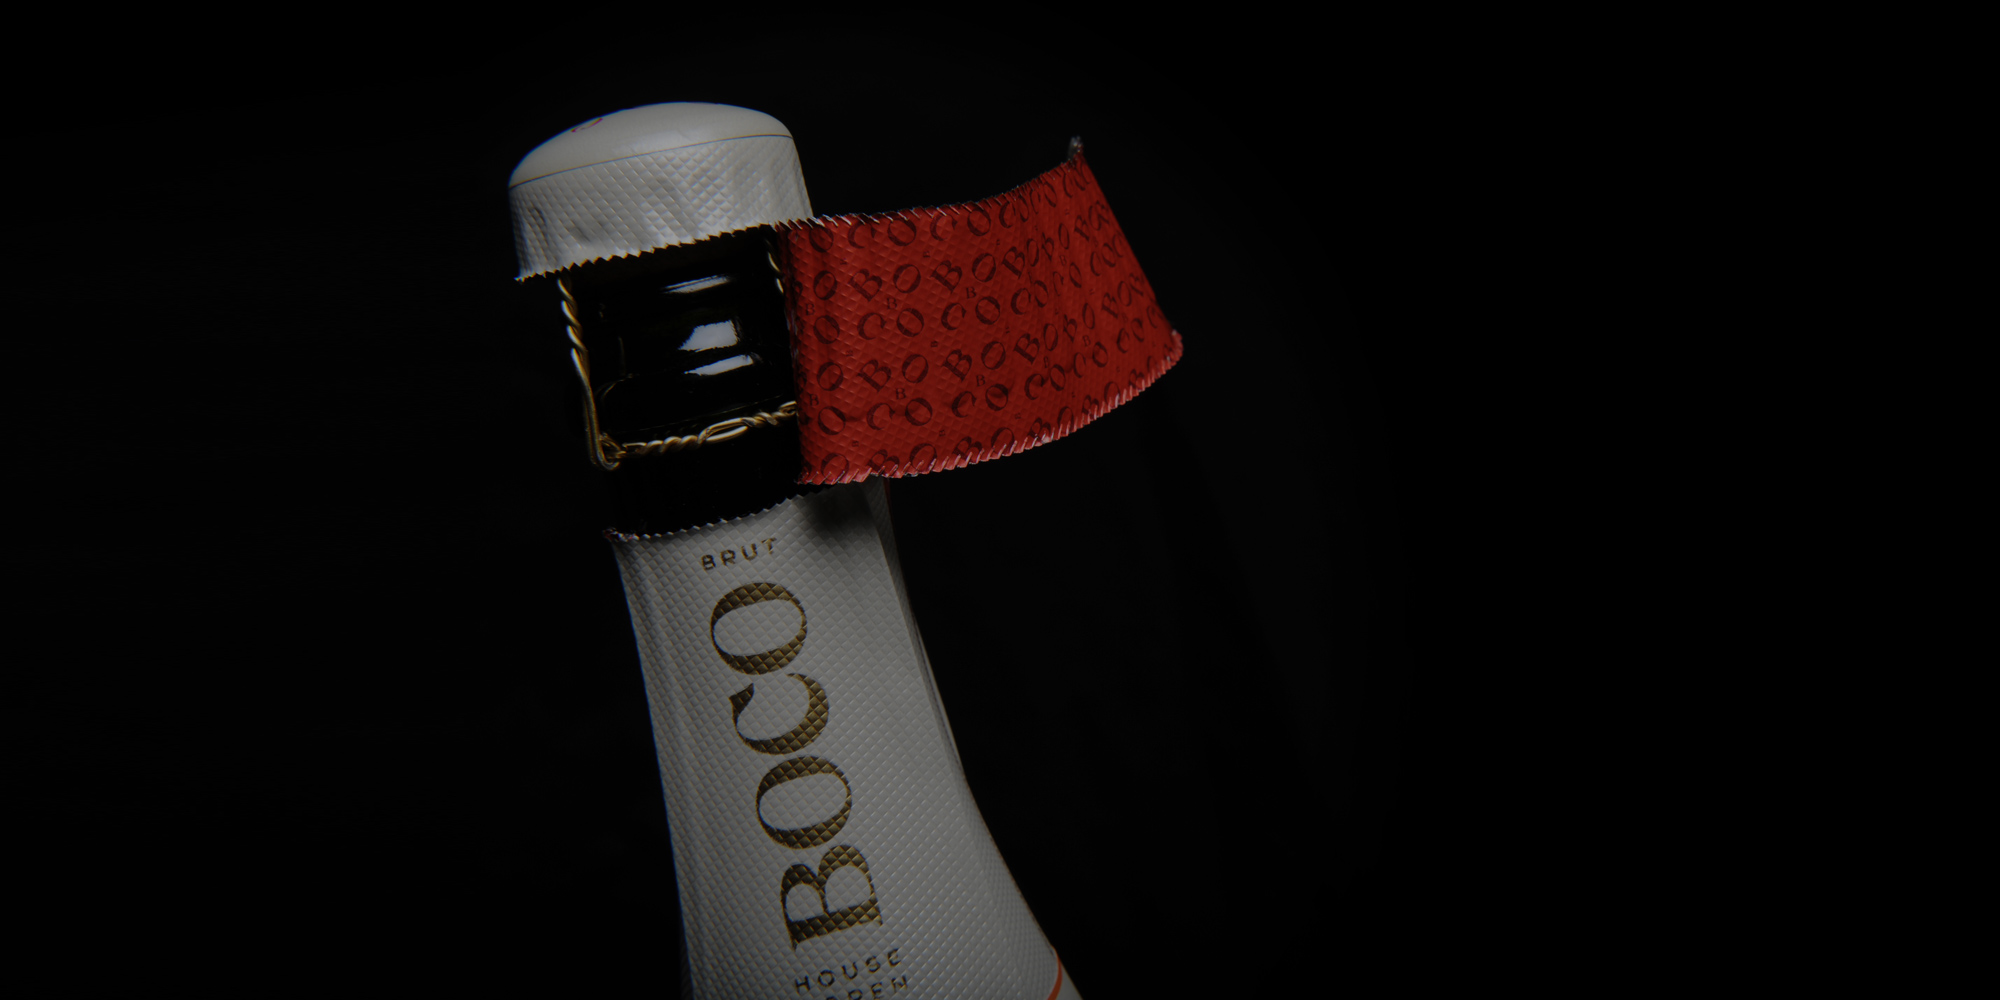 House Coren vineyard, winery, négociant West Sussex. Producers of Boco sparkling wine.